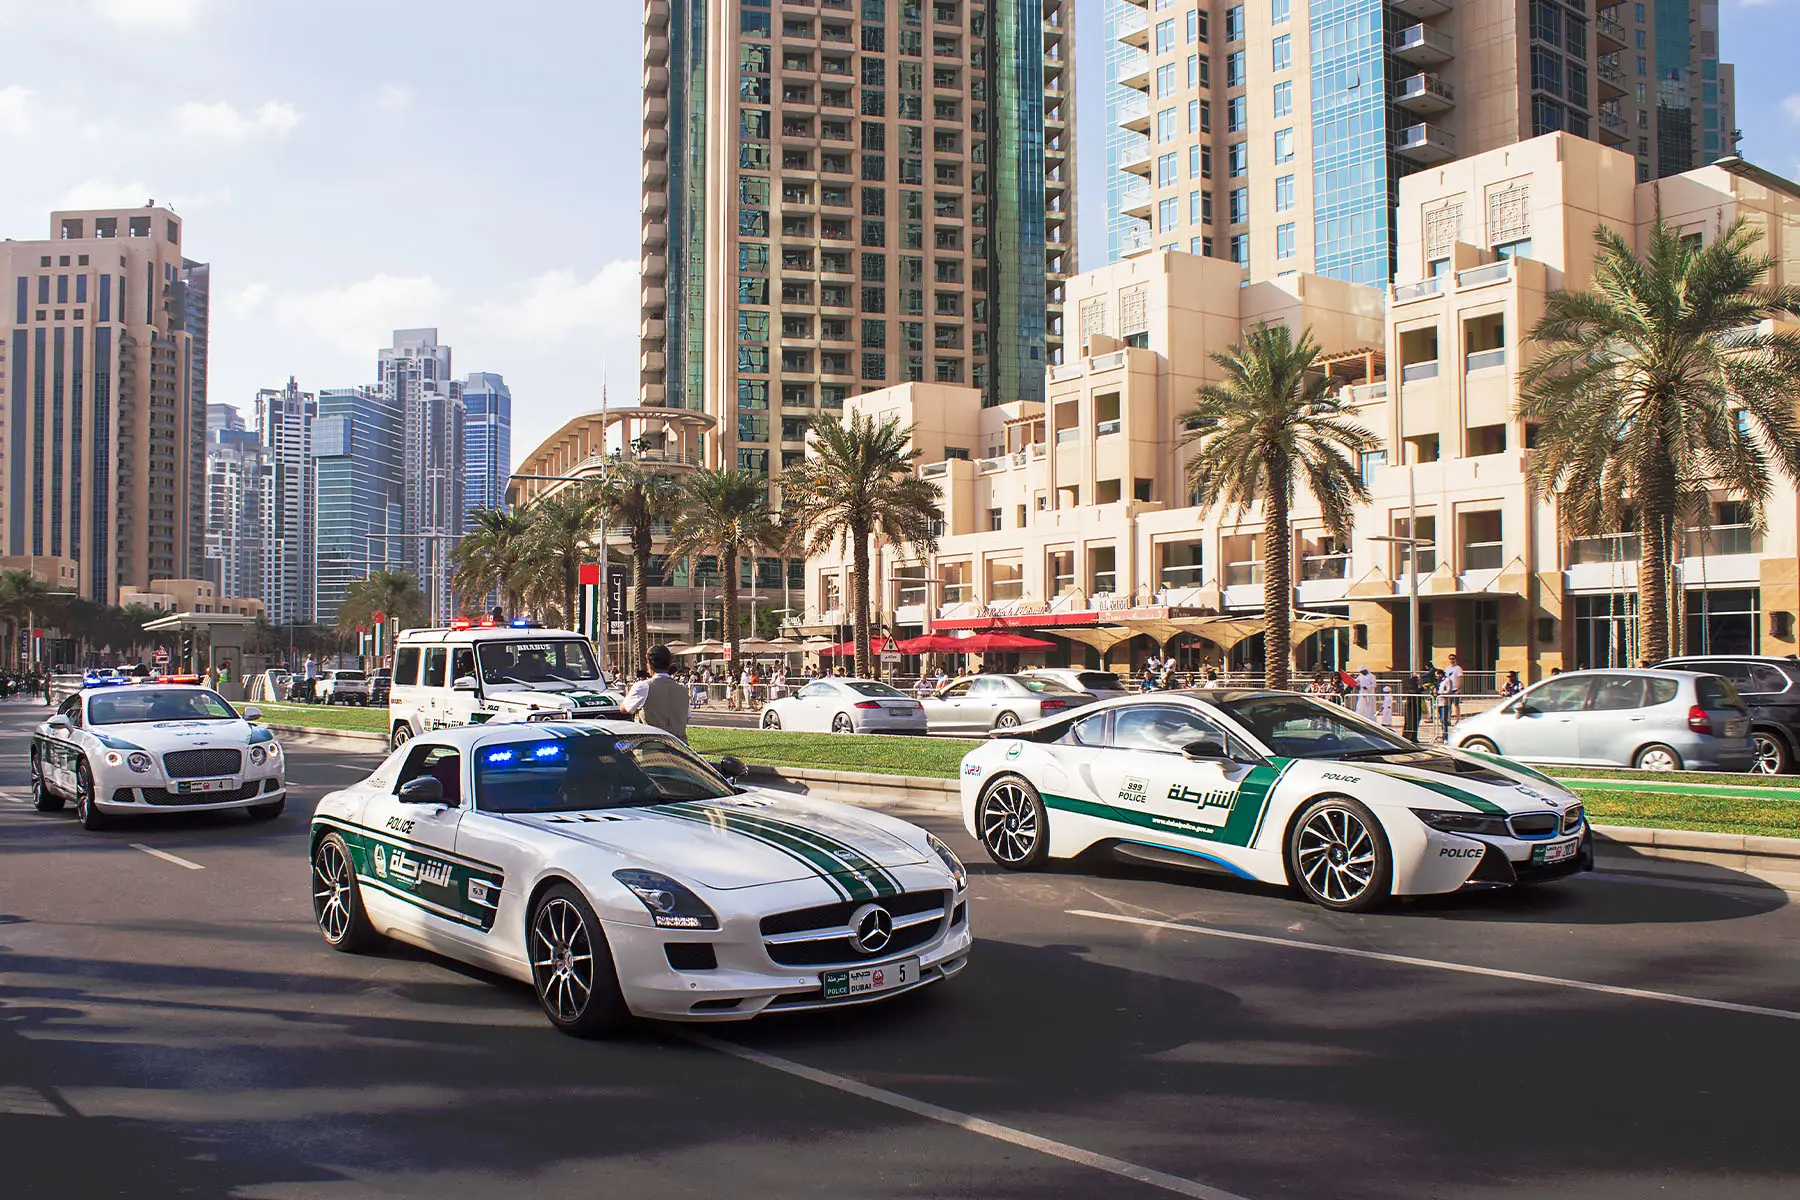 The Dubai Police